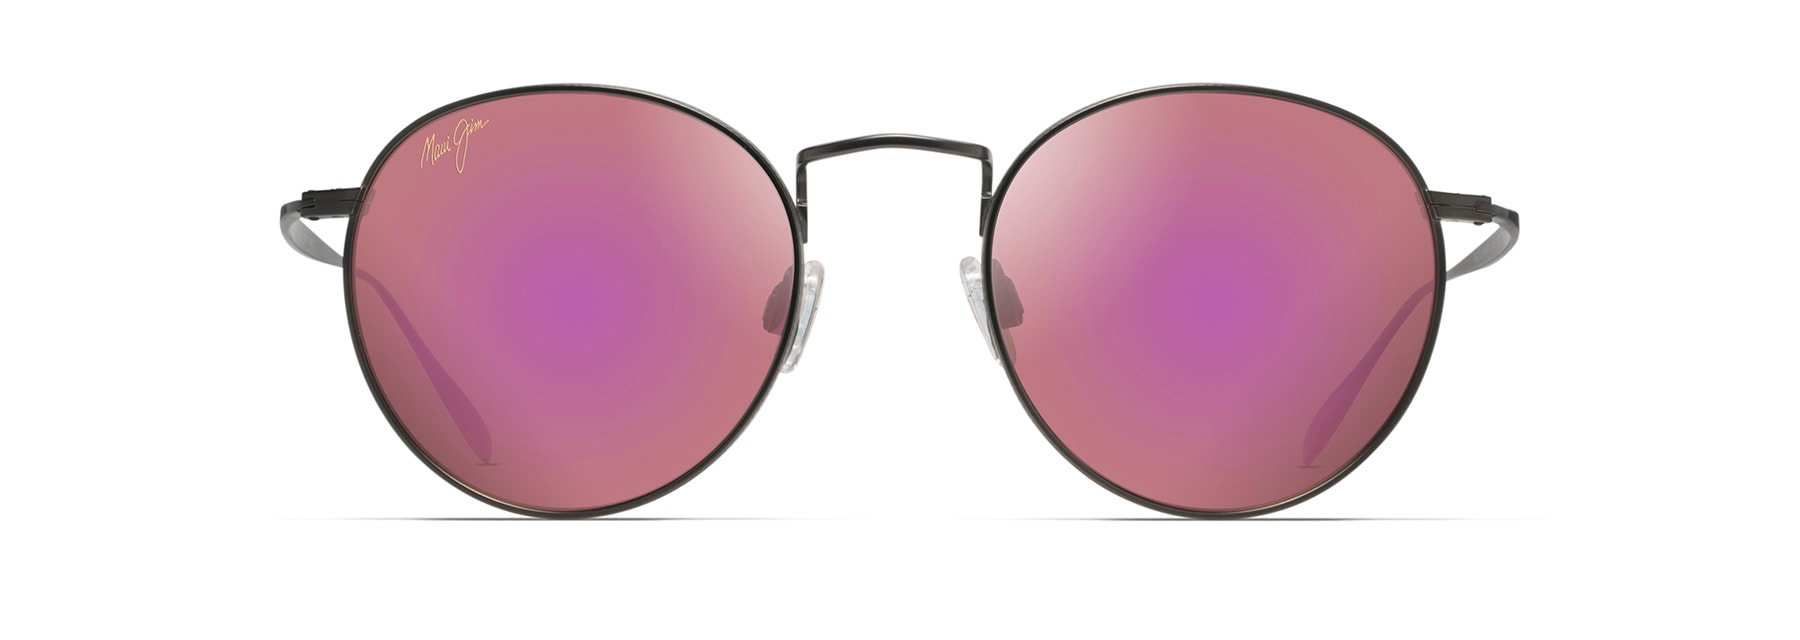 Asian Fit Sunglasses | Maui Jim®